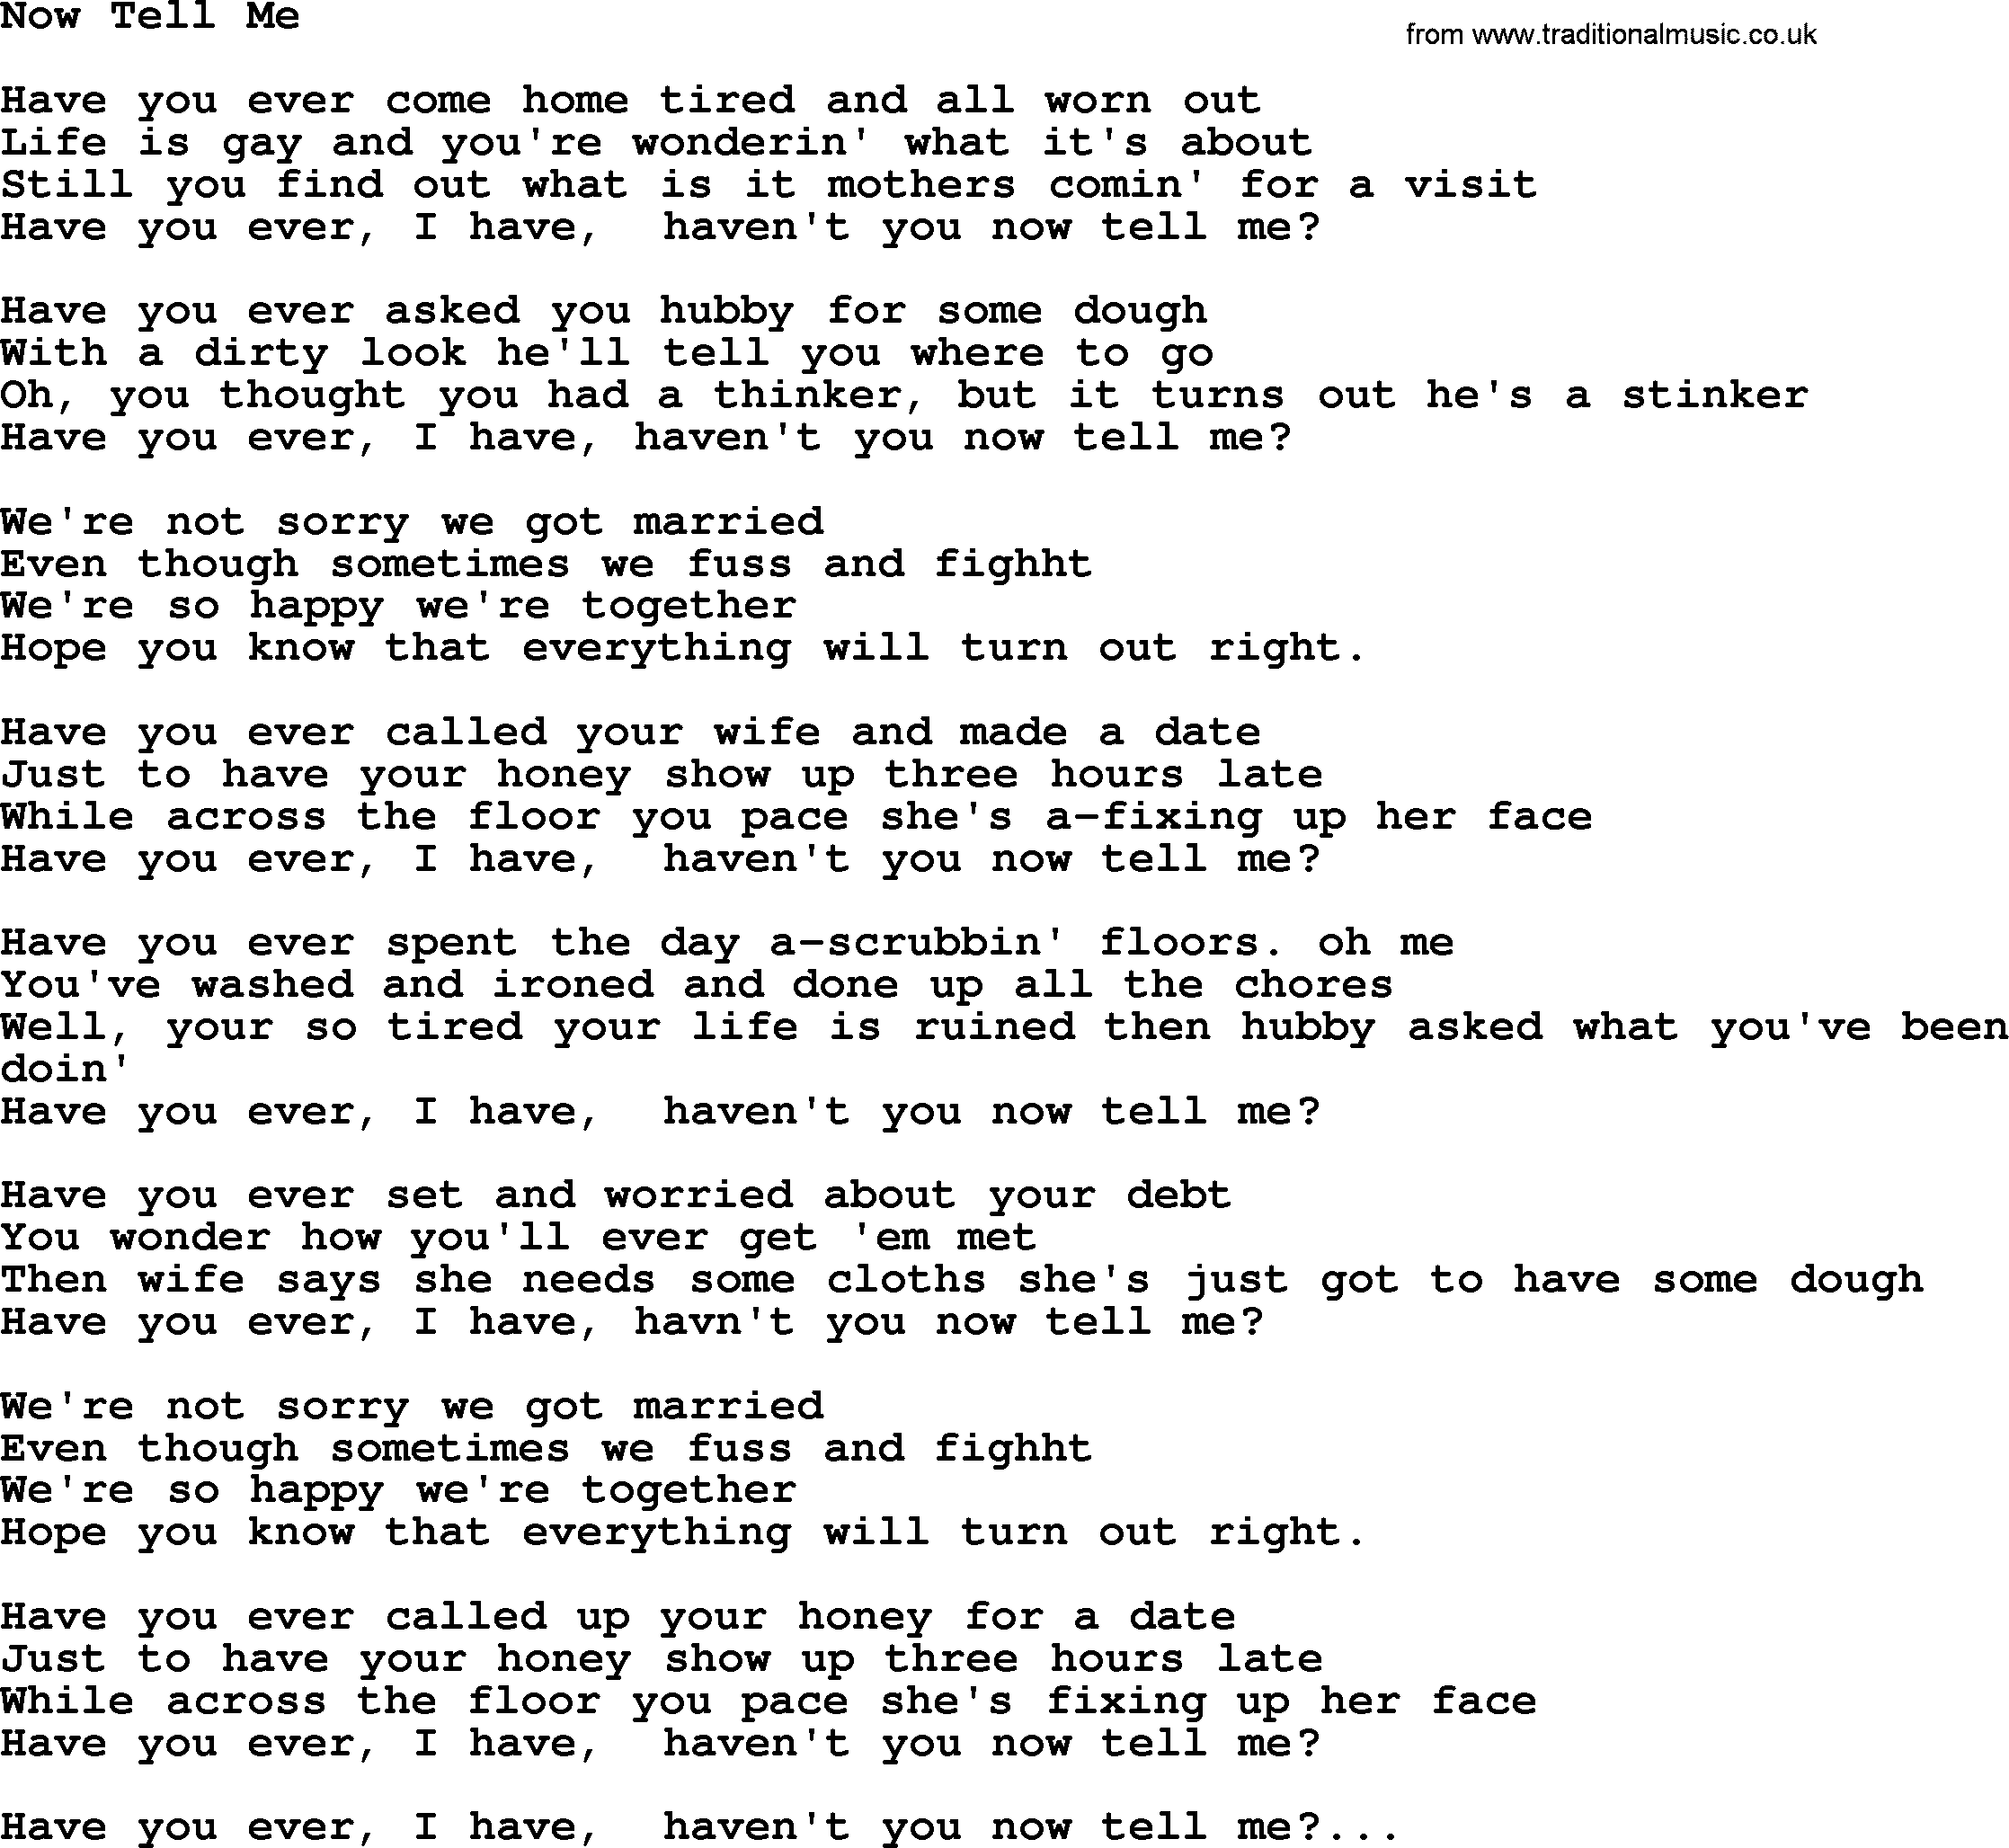 George Jones song: Now Tell Me, lyrics